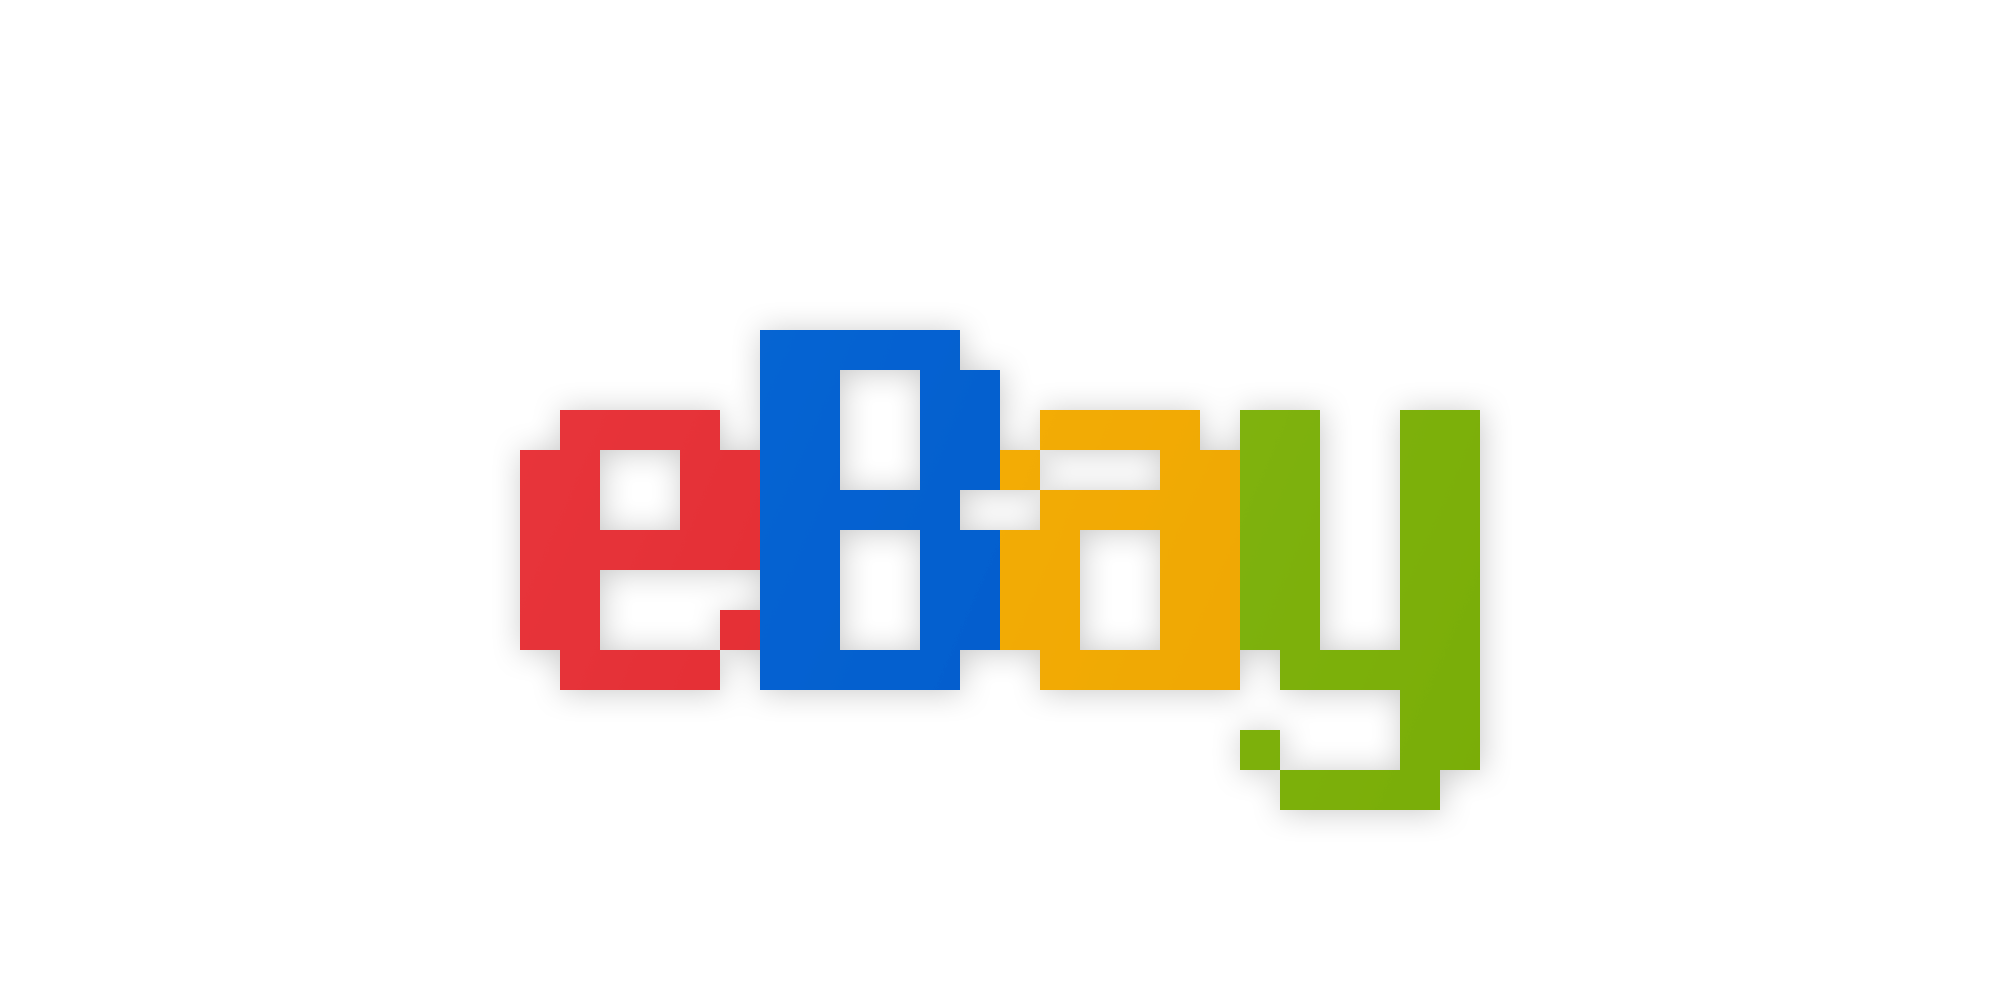 Google - Everyday Pixel Art Logo by Shalabh Singh on Dribbble